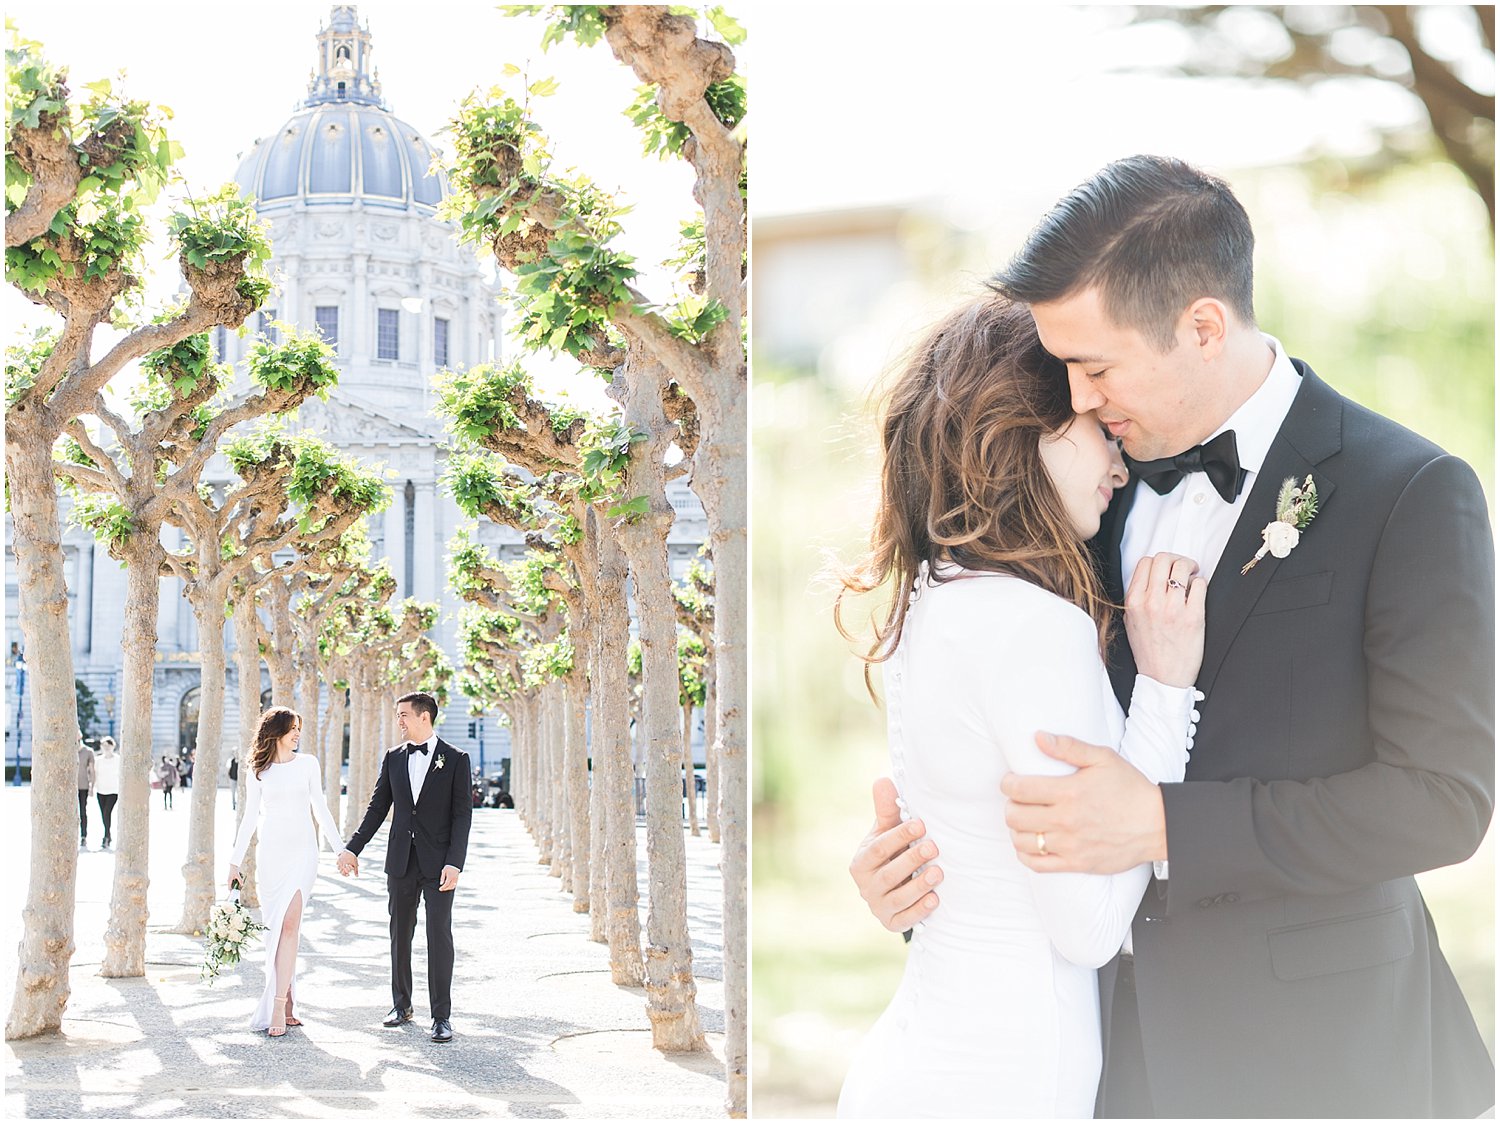 blueberryphotography.com | San Francisco Wedding Photography | Blueberry Photography | Weddings at SF City Hall | San Francisco City Hall Wedding Photographer